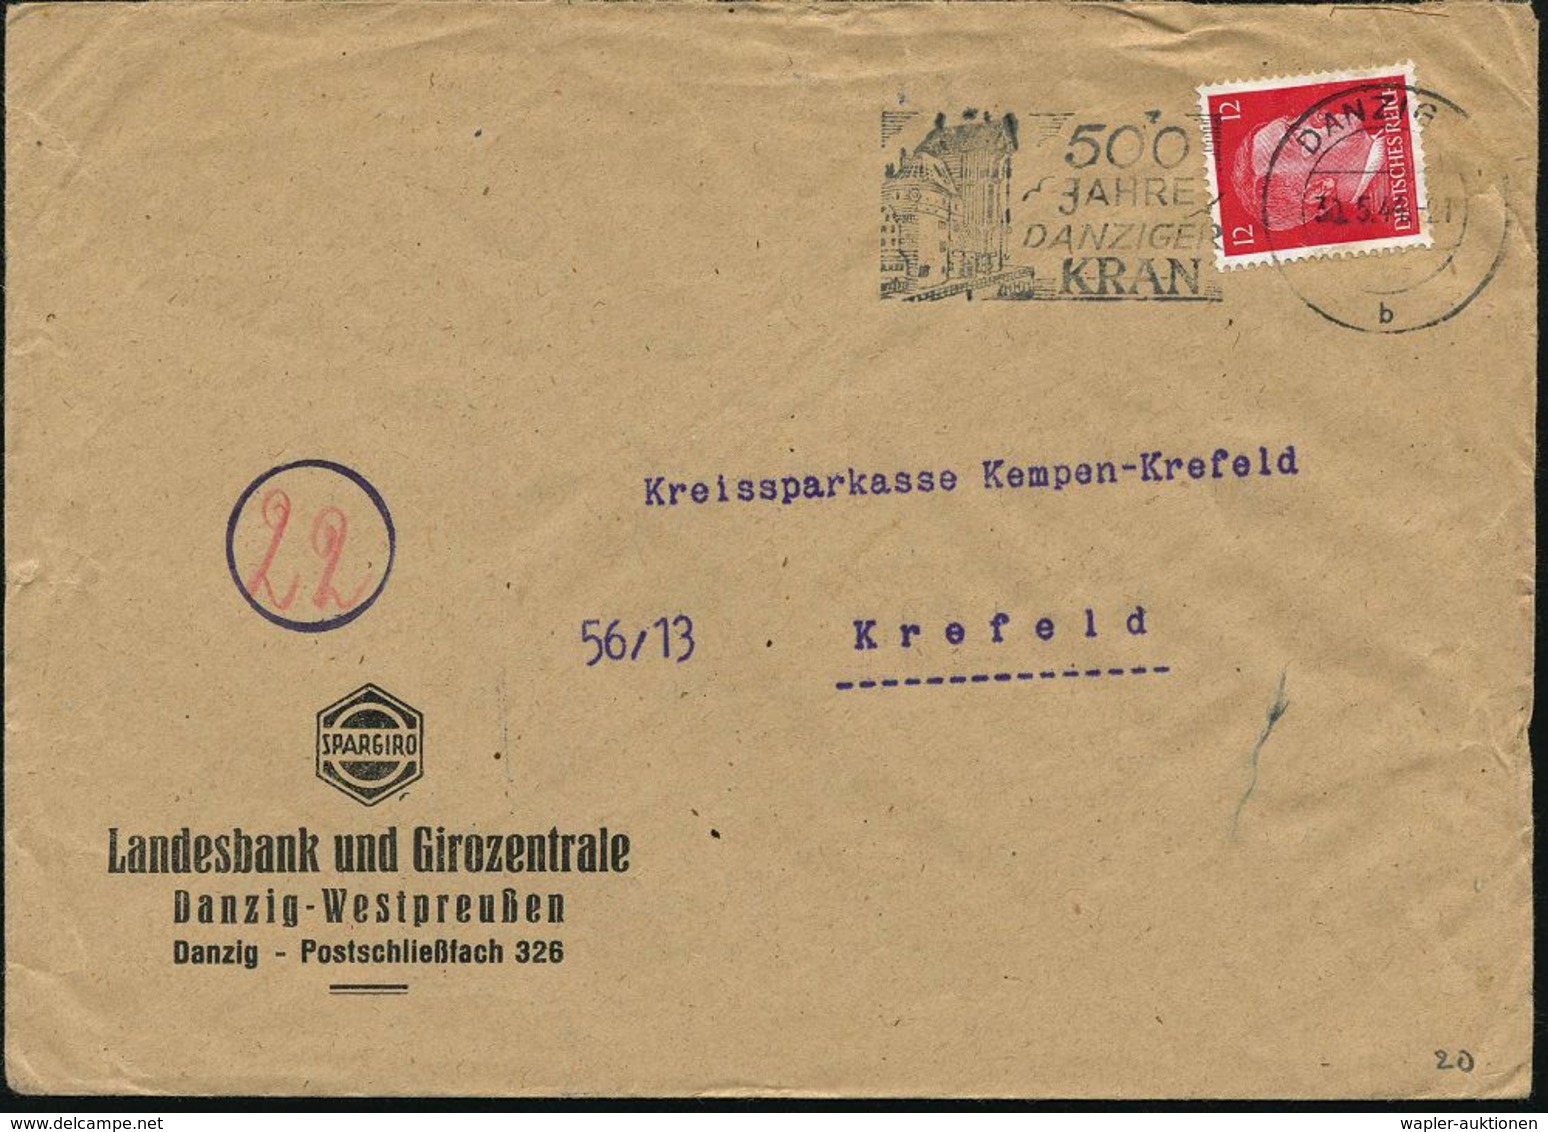 BERÜHMTE BAUWERKE & MONUMENTE : DANZIG 5/ B/ 500/ JAHRE/ DANZIGER/ KRAN 1944 (30.5.) MWSt = Krantor , Firmen-Bf.: Landes - Monuments